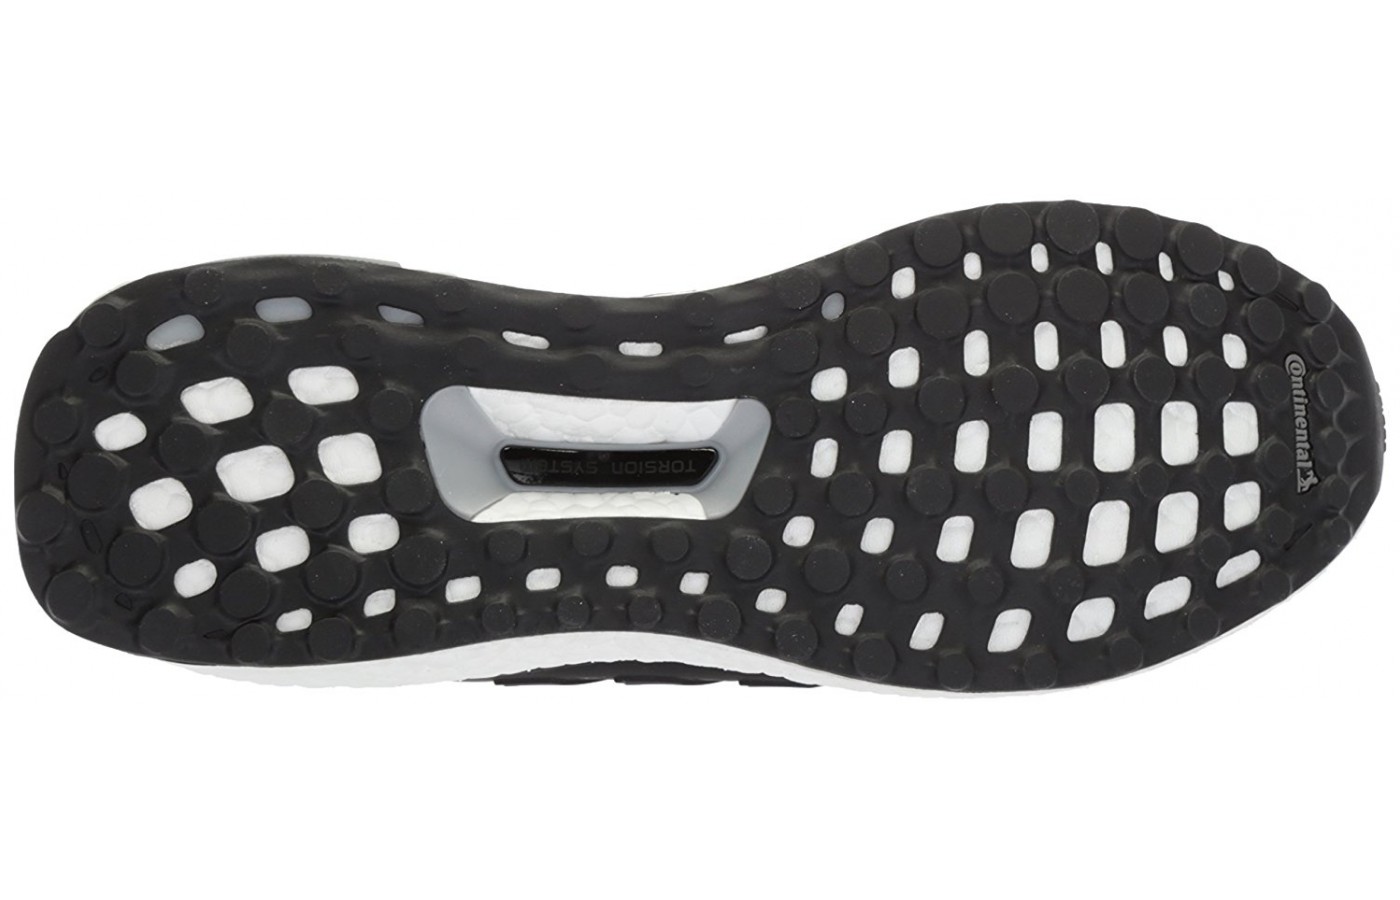 Adidas Ultraboost sole